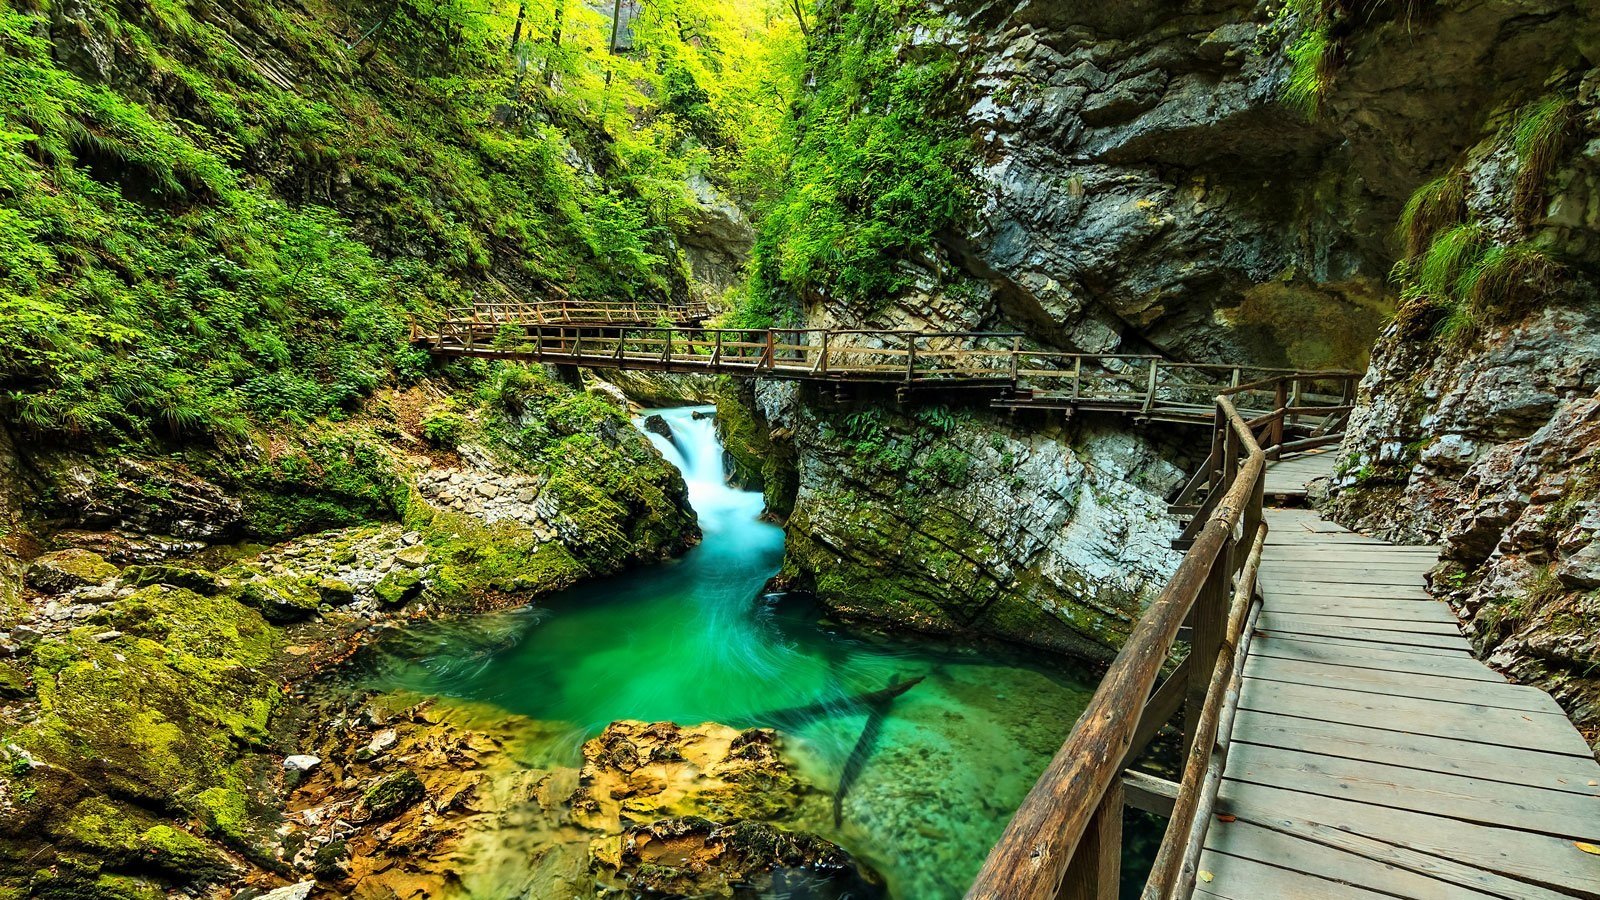 Slovenia's Vintgar Gorge